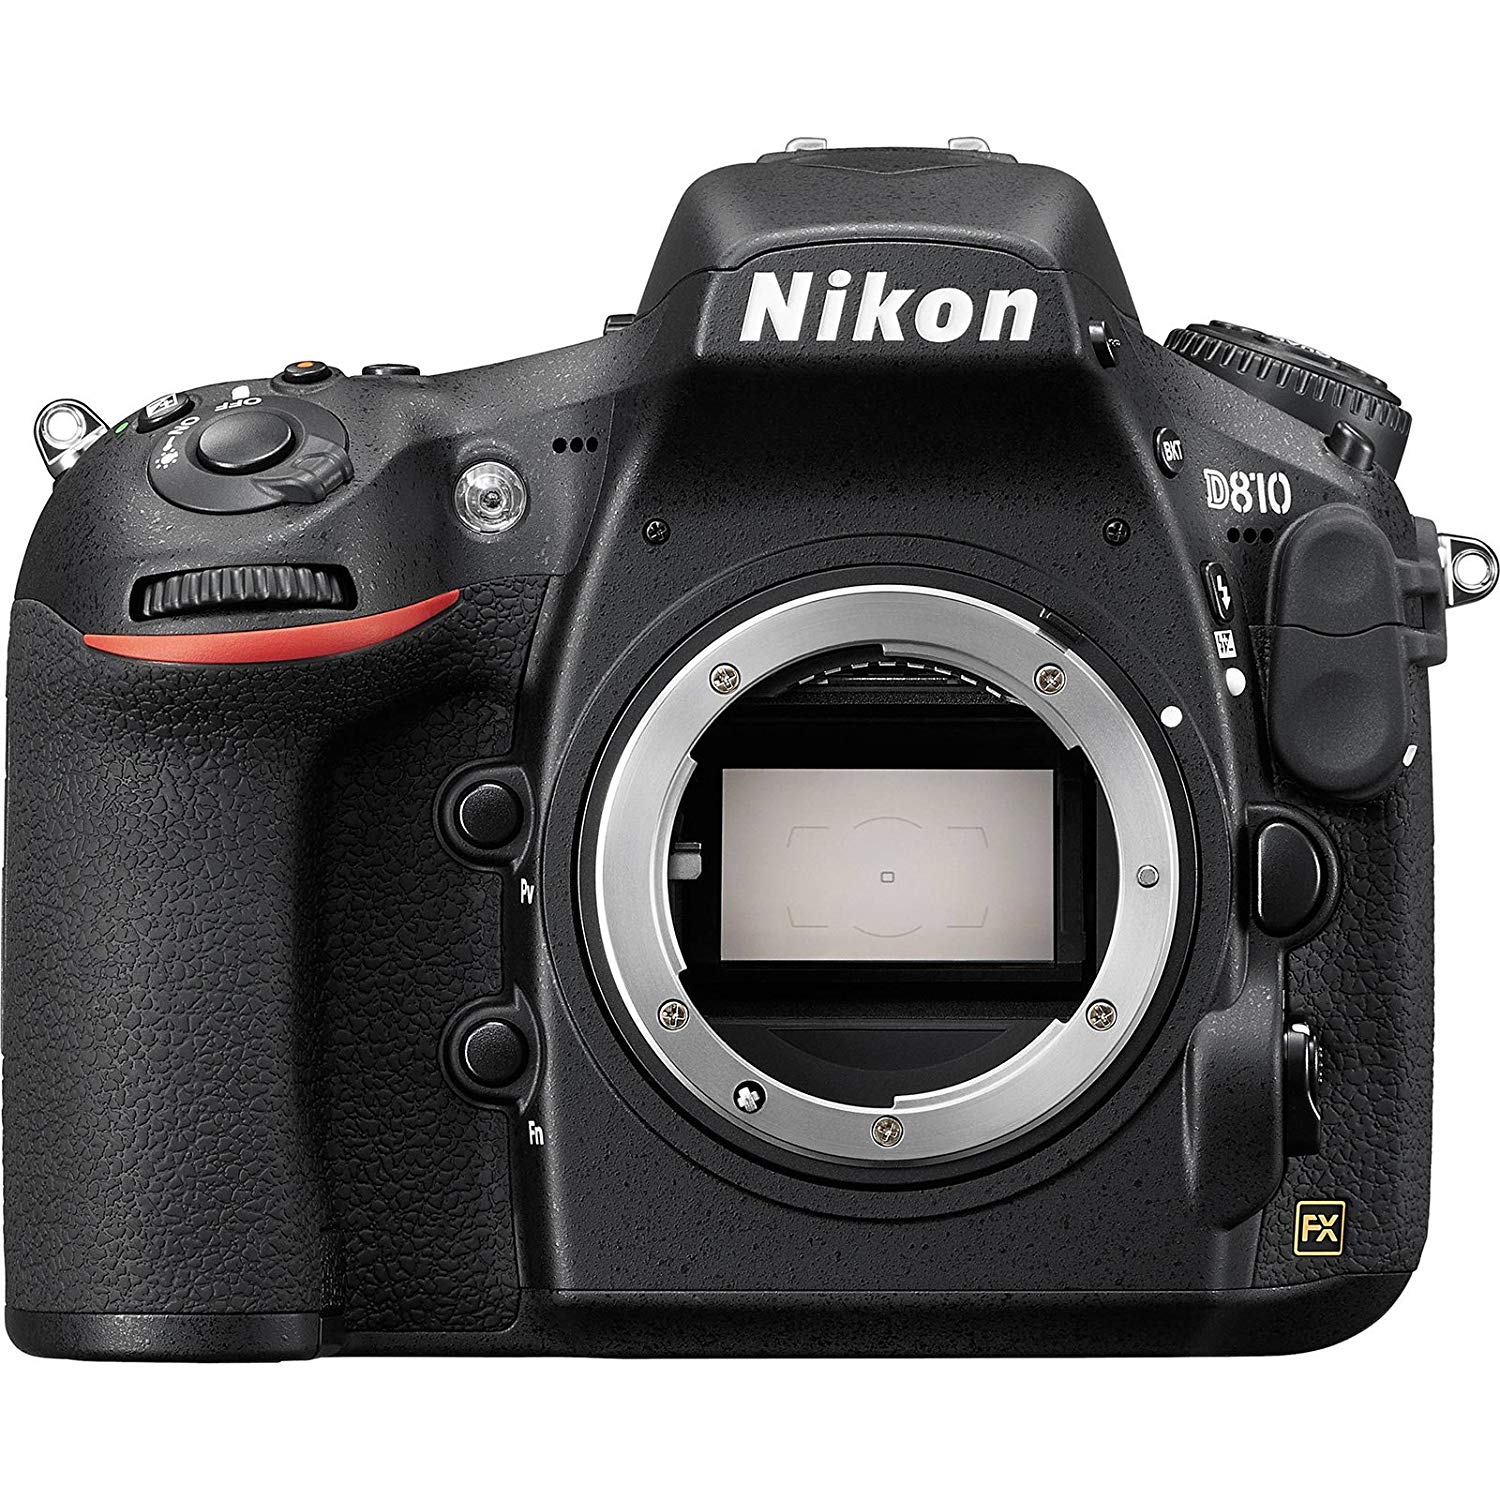 Nikon Корпус цифровой SLR камеры D810 (после ремонта)